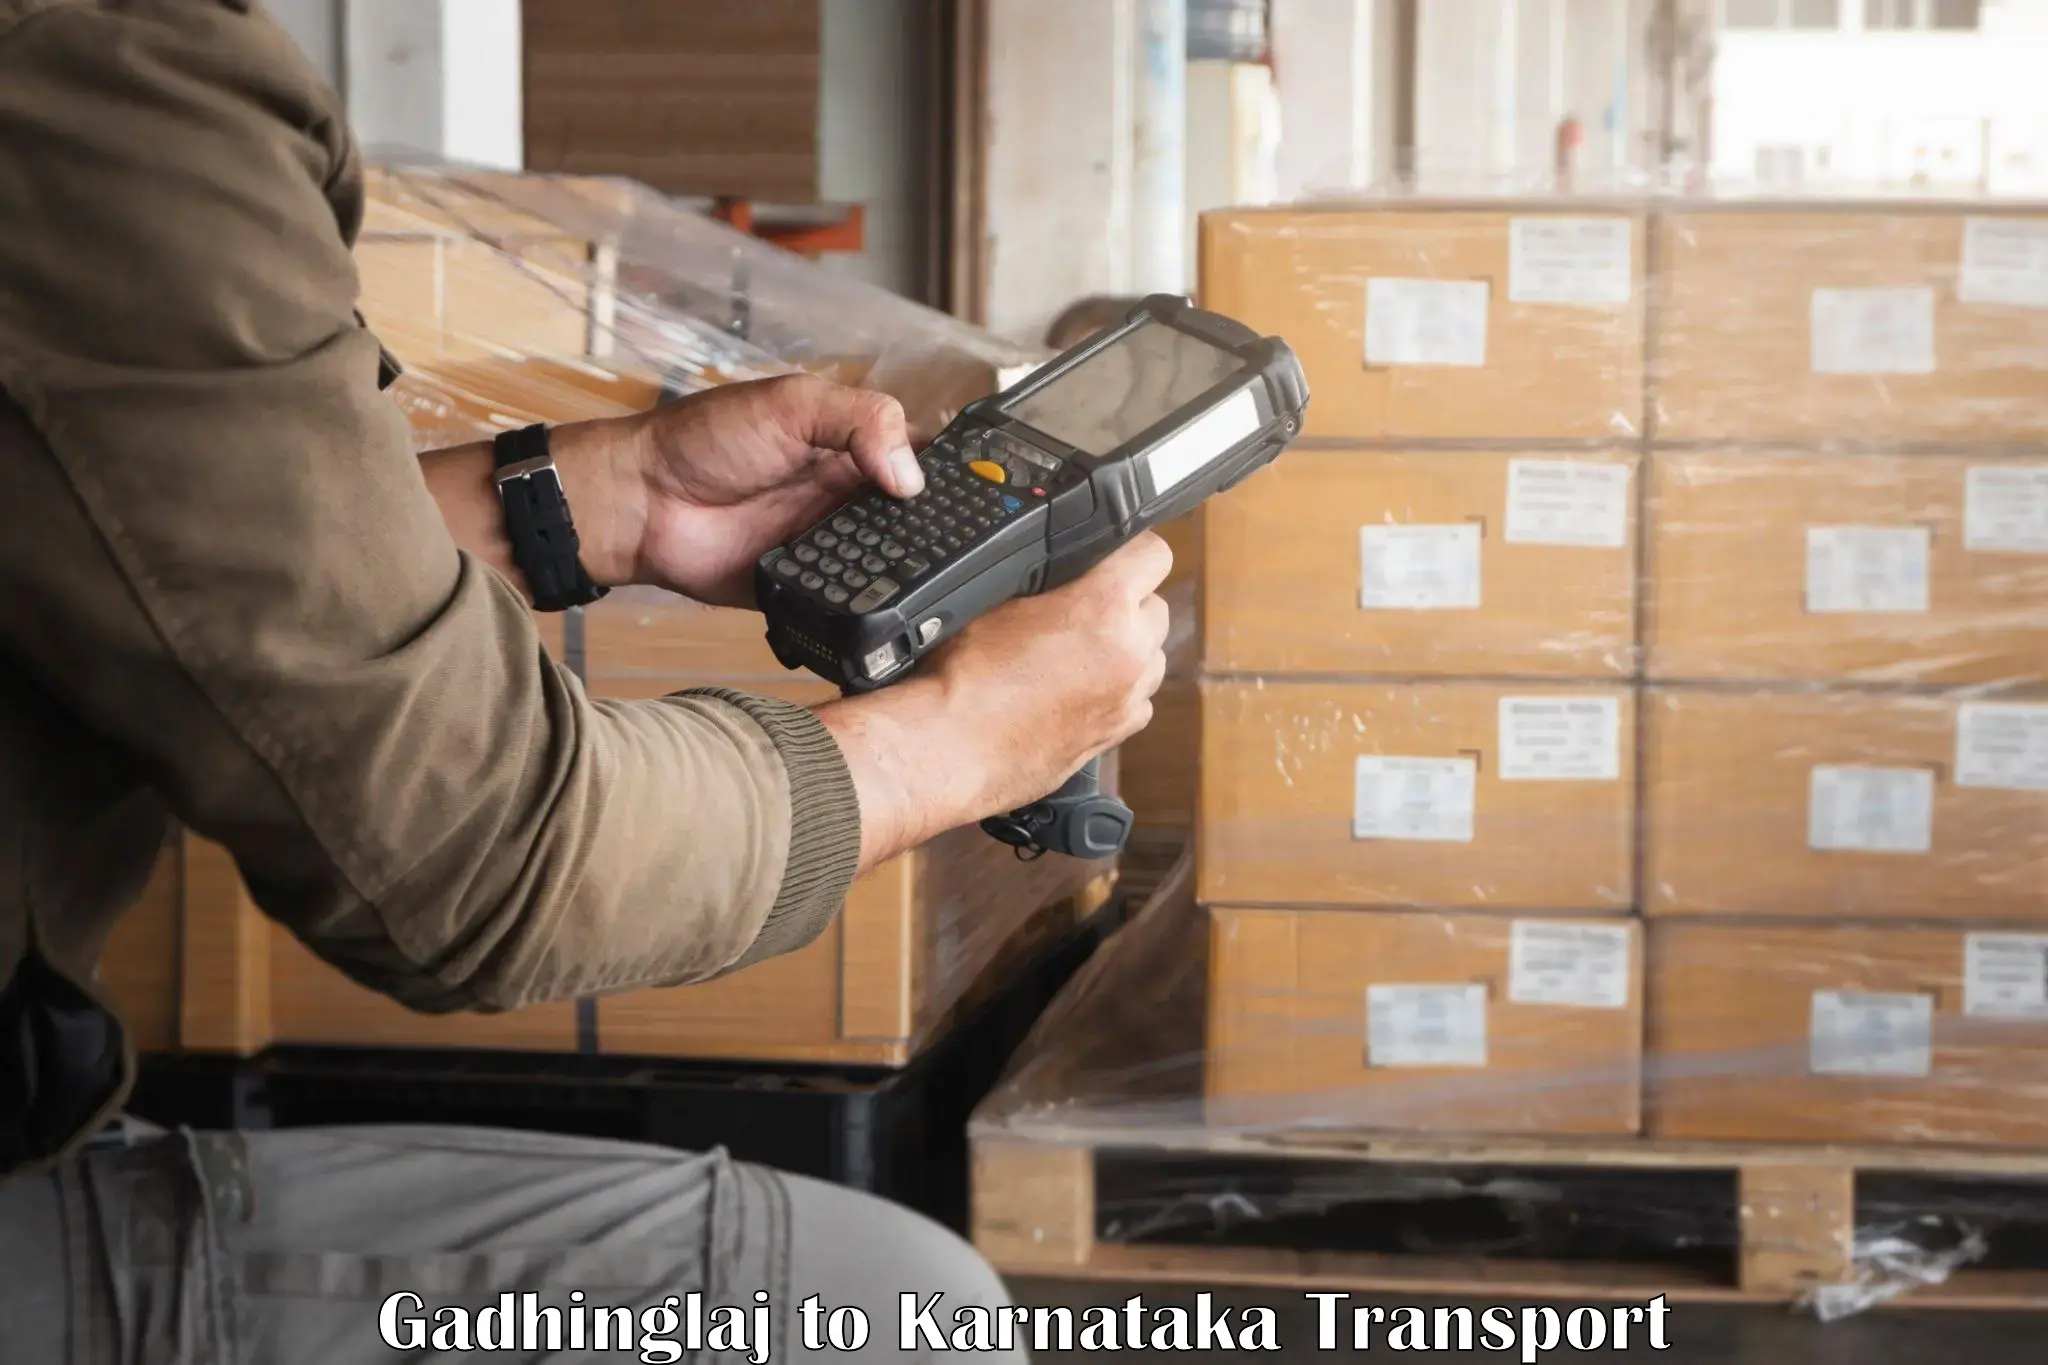 Transport shared services Gadhinglaj to Karnataka